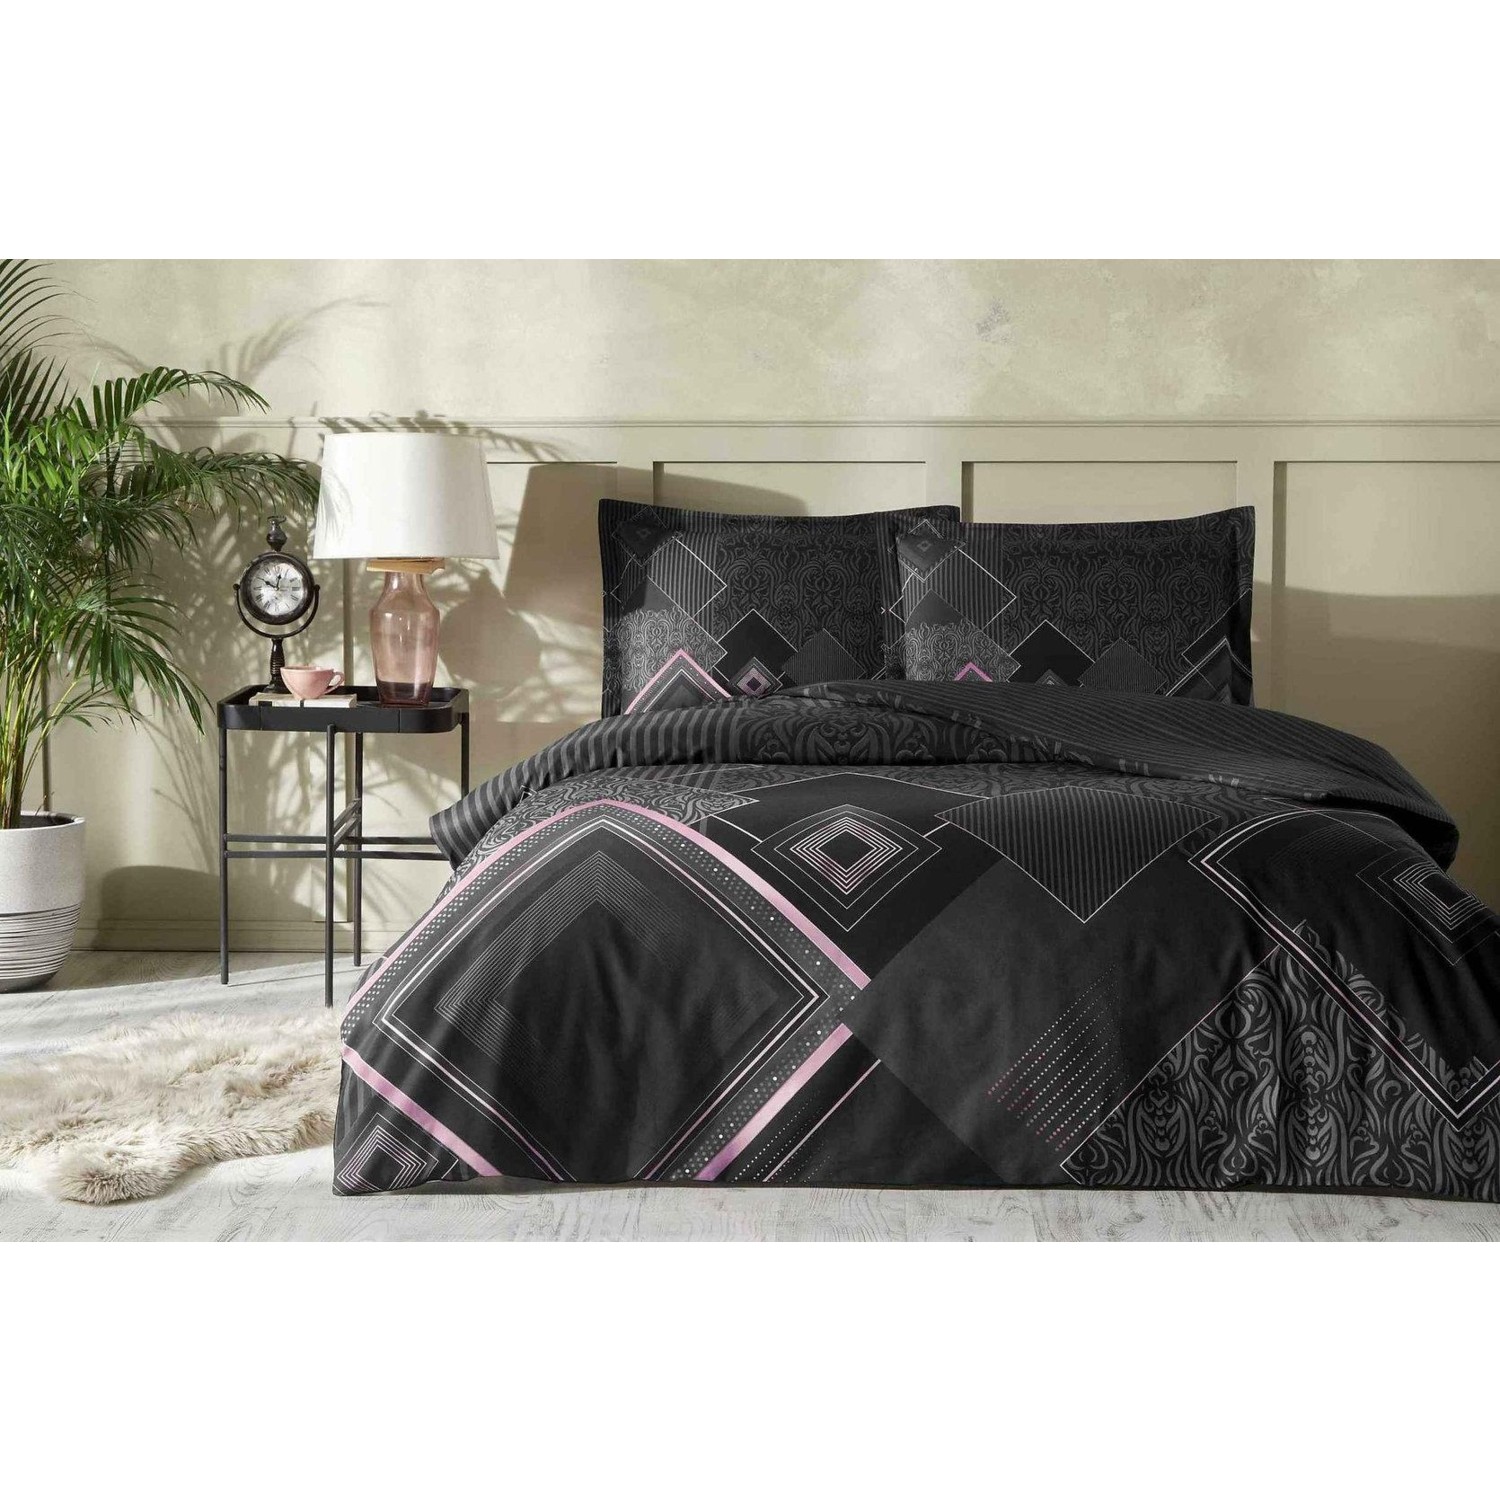 Комплект постельного белья Ozdilek Snazzy Black Pink King Size nonio siyah örgülü terlik